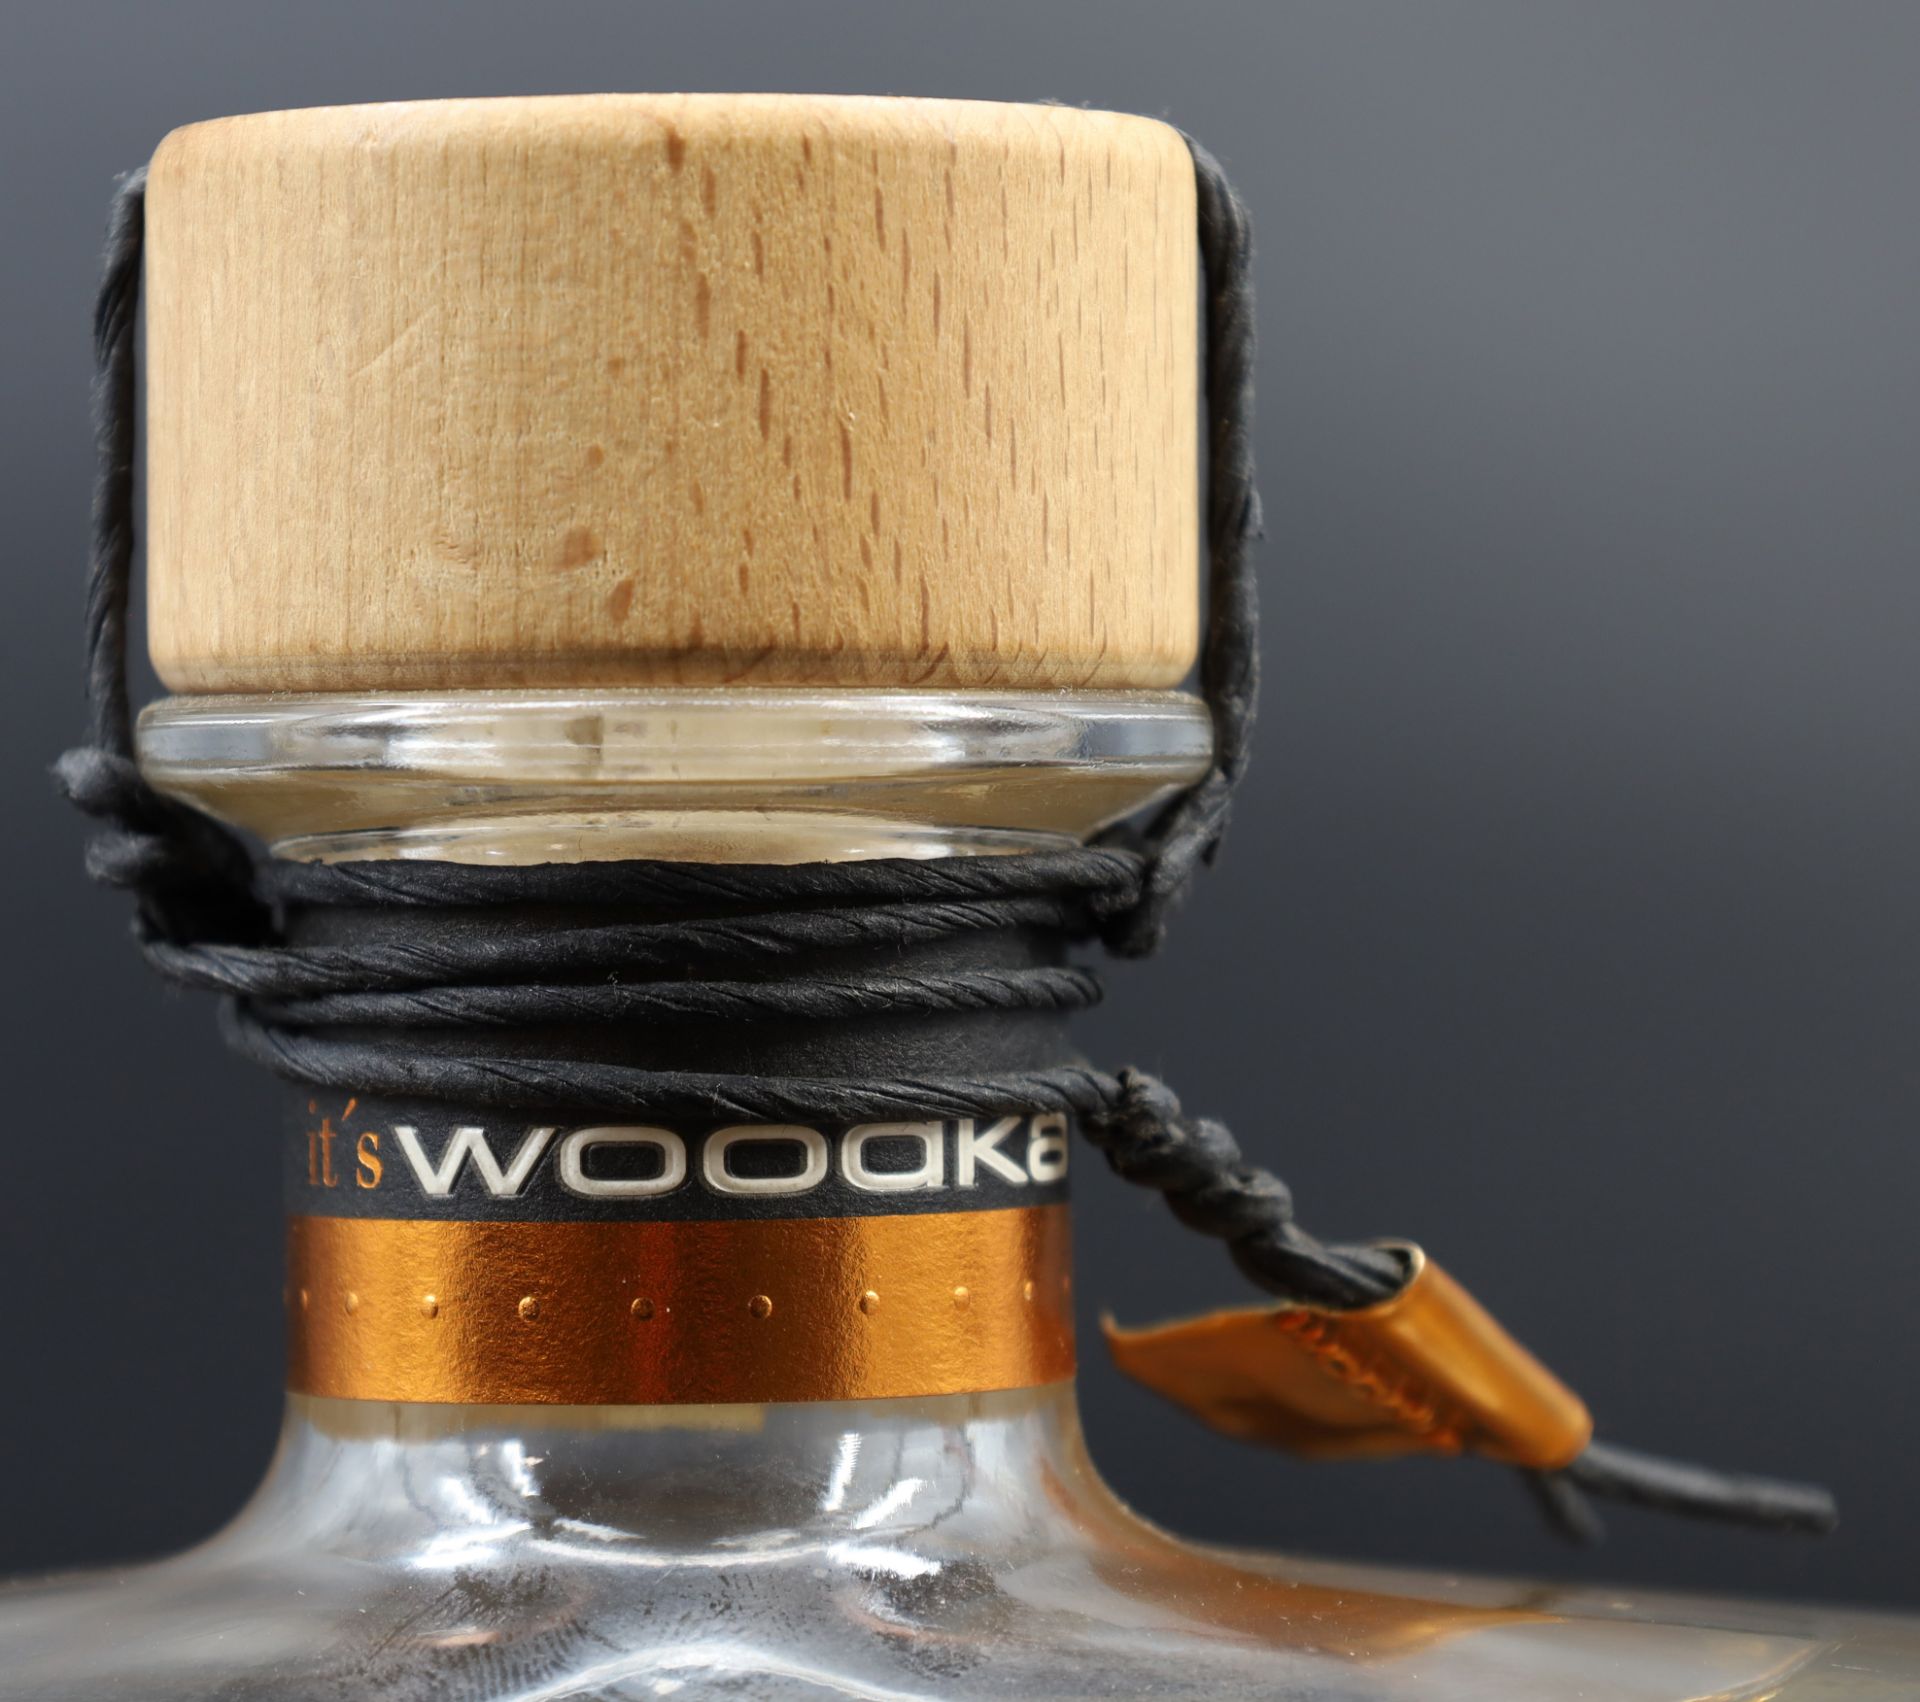 1 bottle of WOODKA. Vodka. Germany. 50.5 % vol. - Image 6 of 6